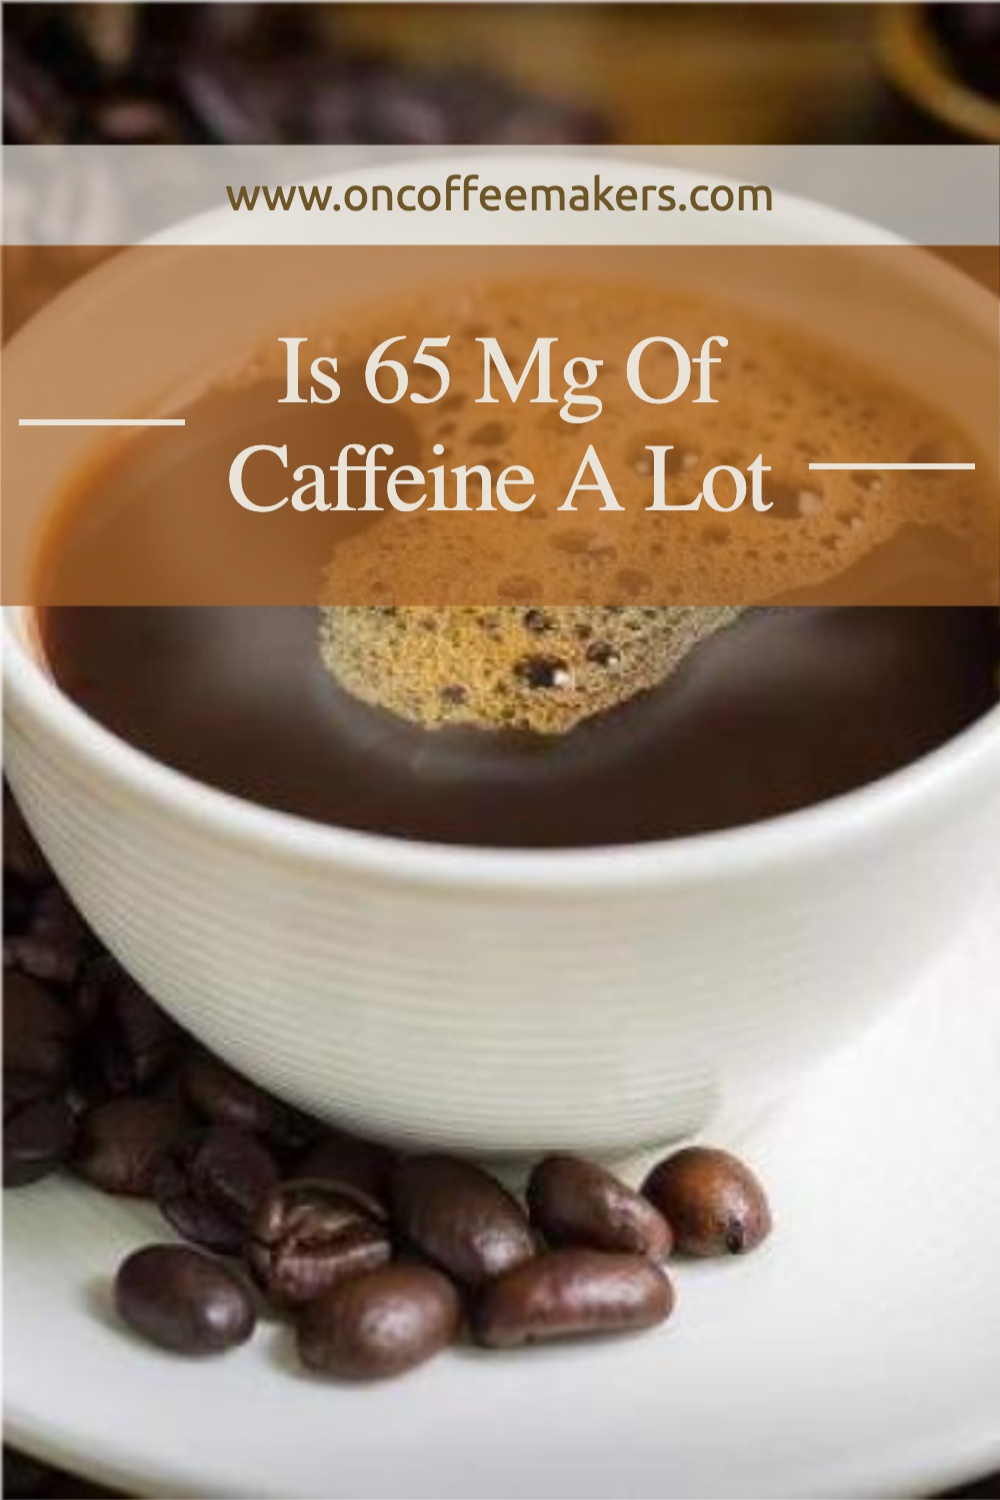 Is-65-Mg-Of-Caffeine-A-Lot.jpg